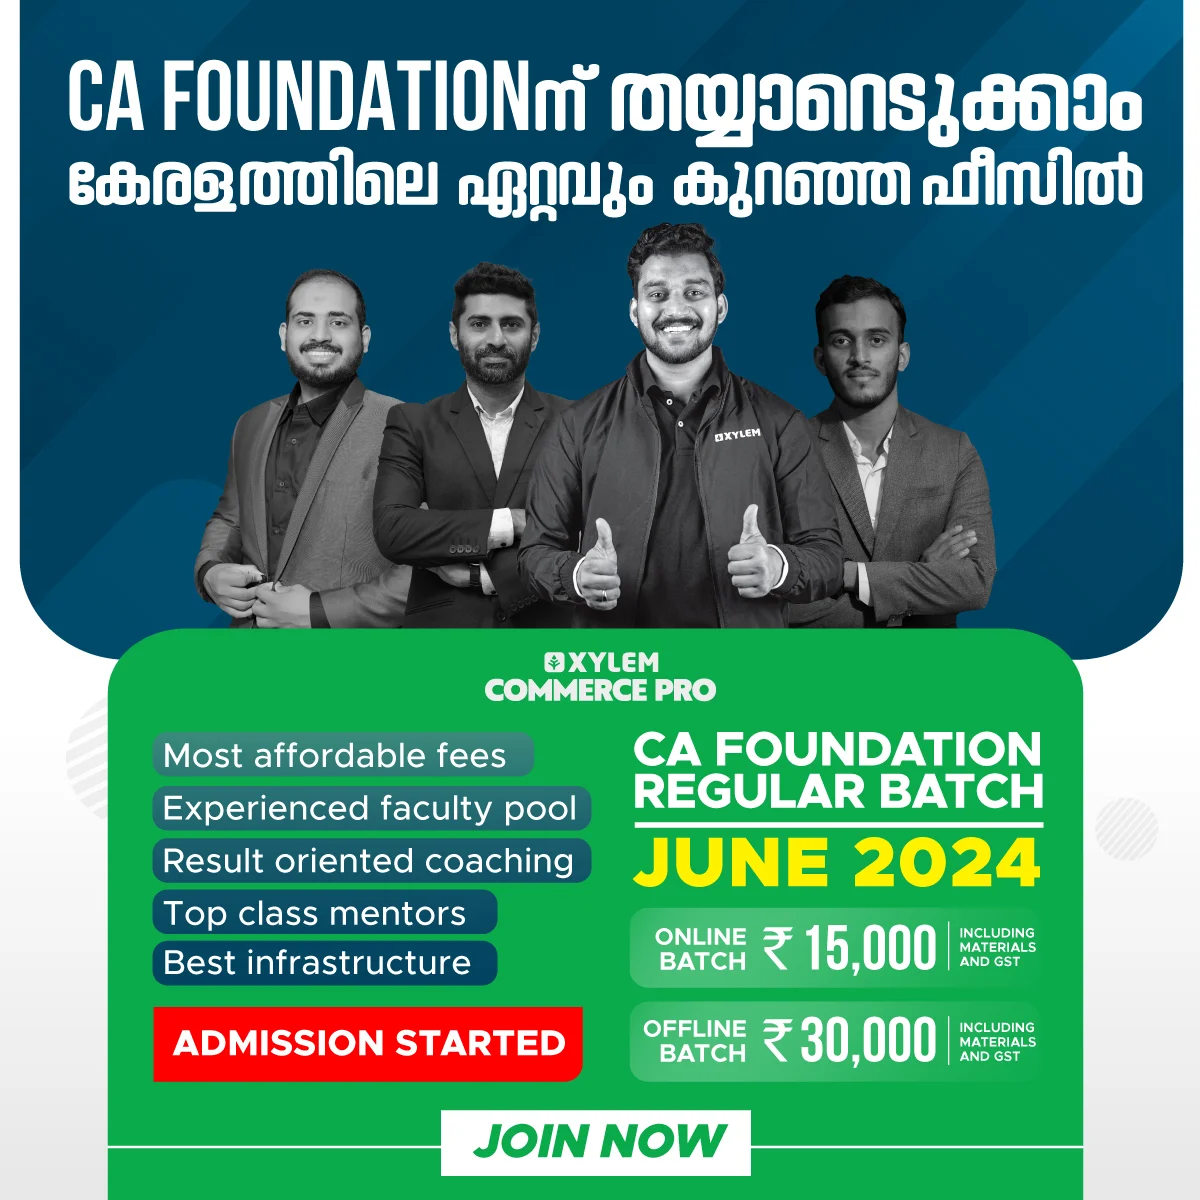 CA Foundation 2024